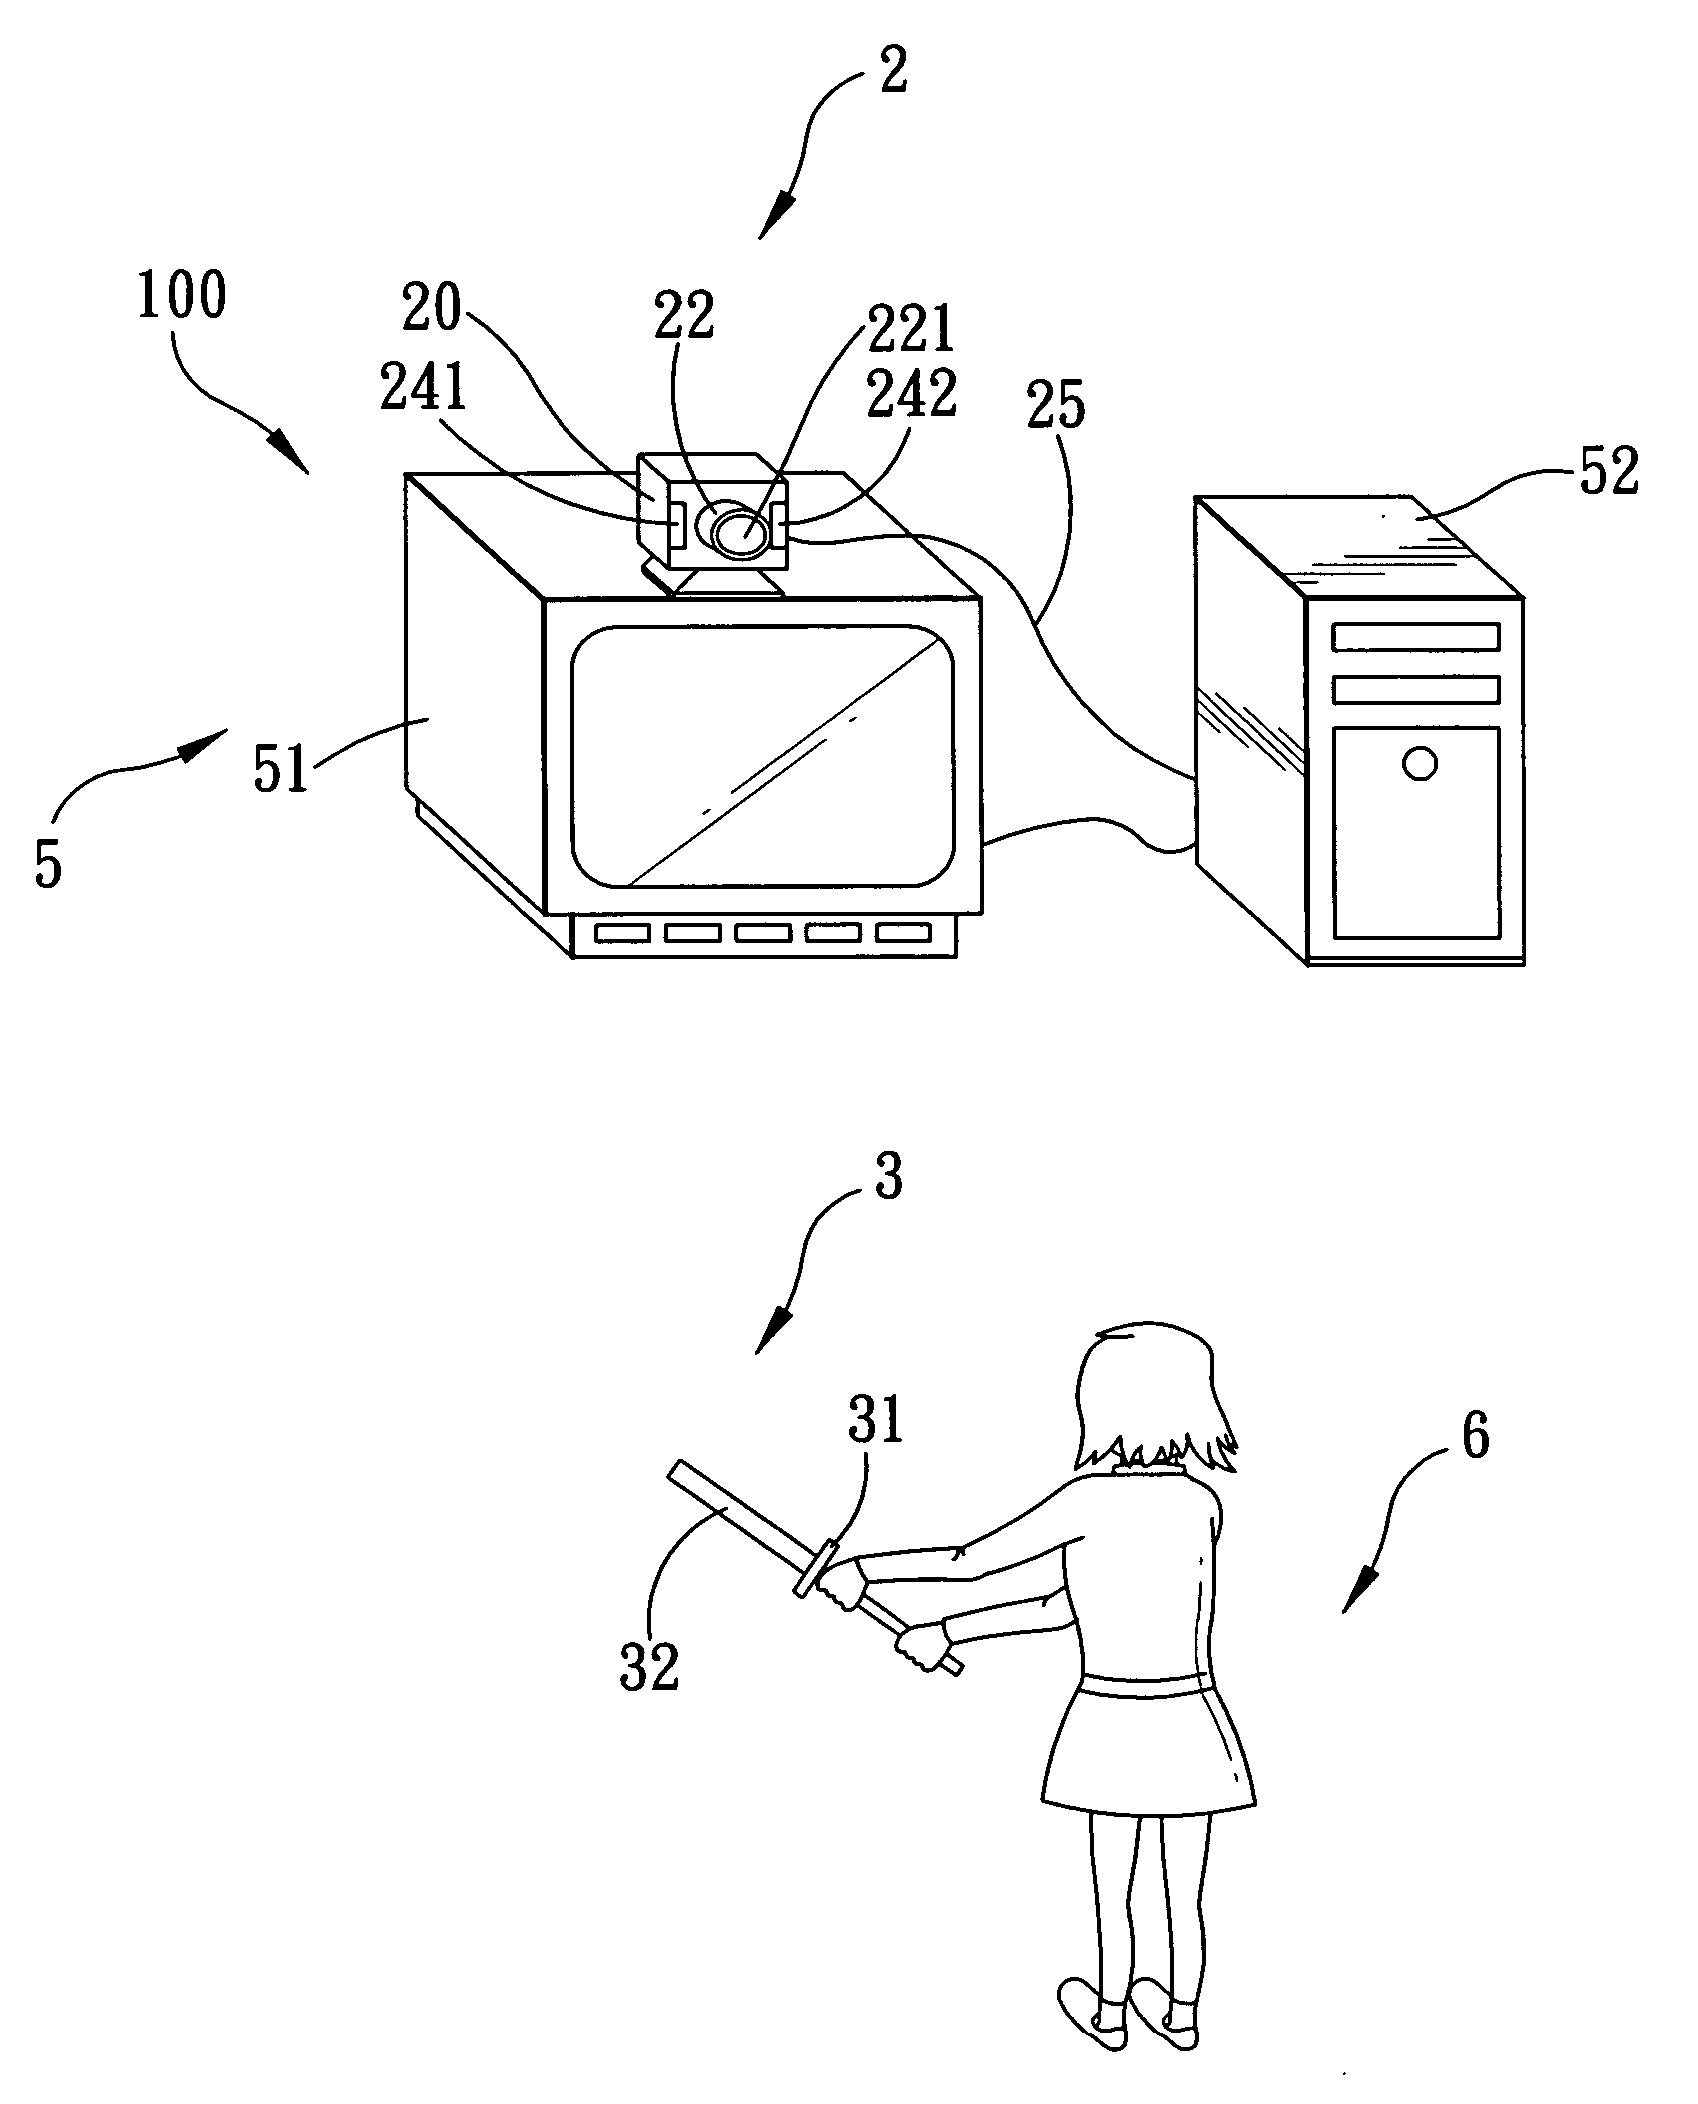 Gaming peripheral apparatus for a gaming computing device